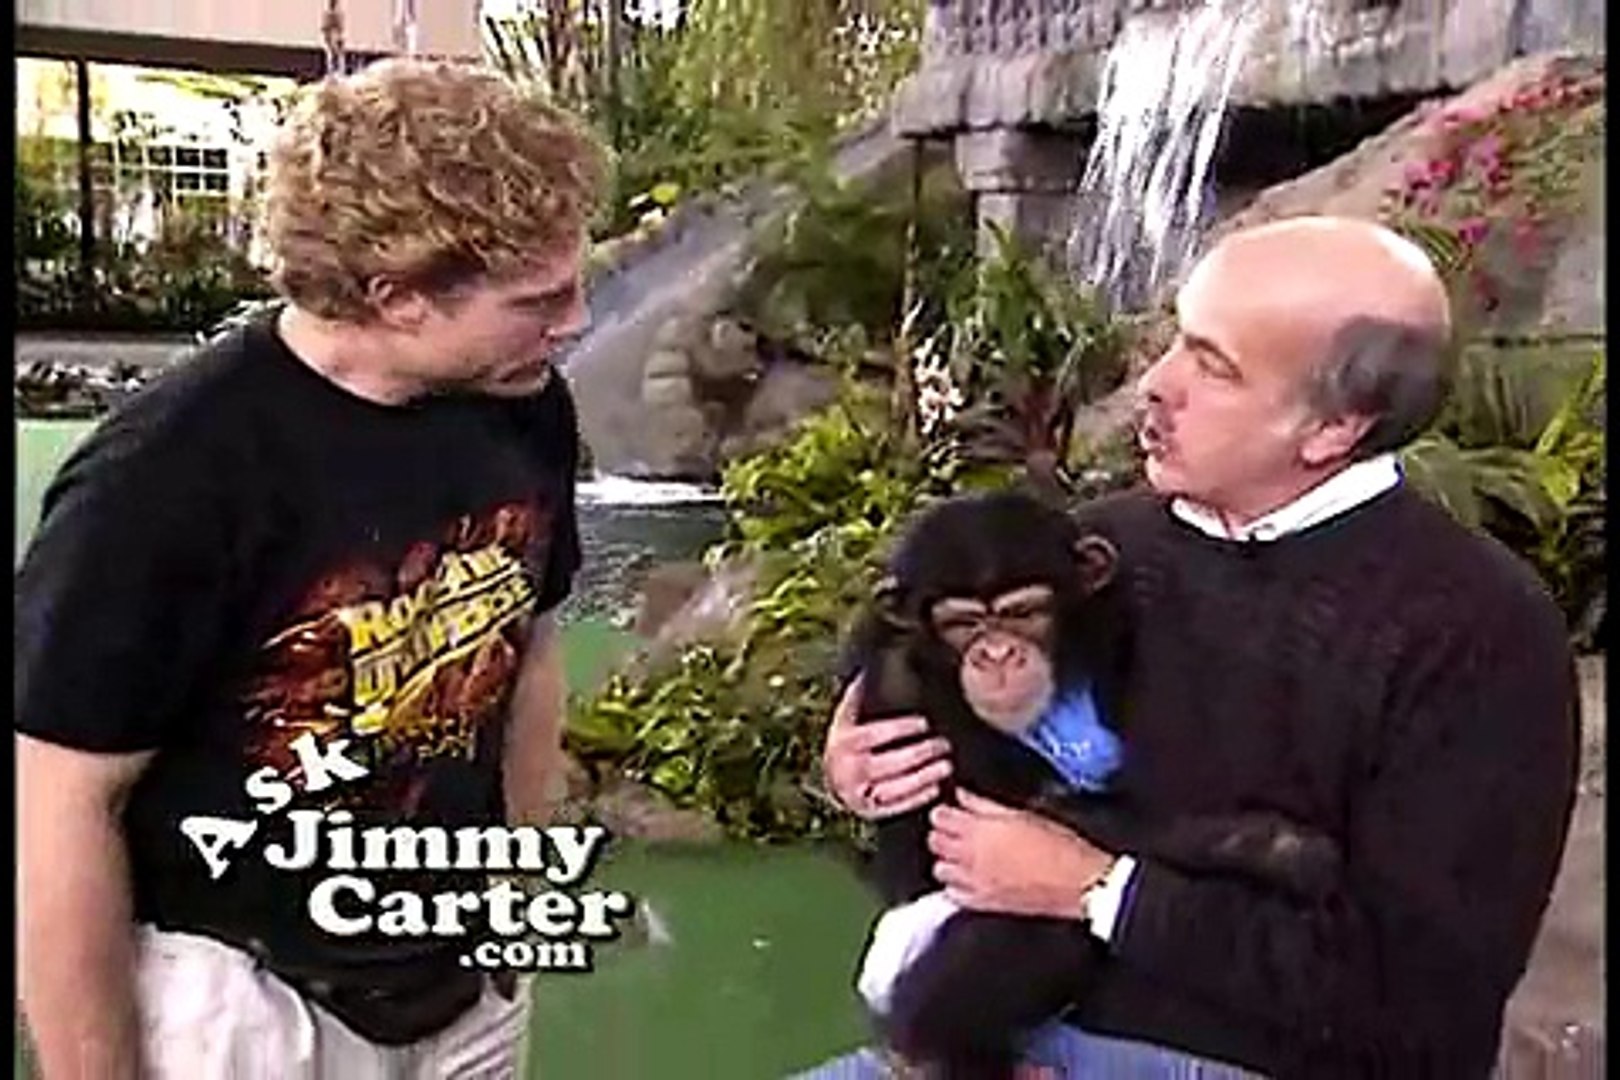 Chimpanzee at Universal Florida and Jimmy Carter